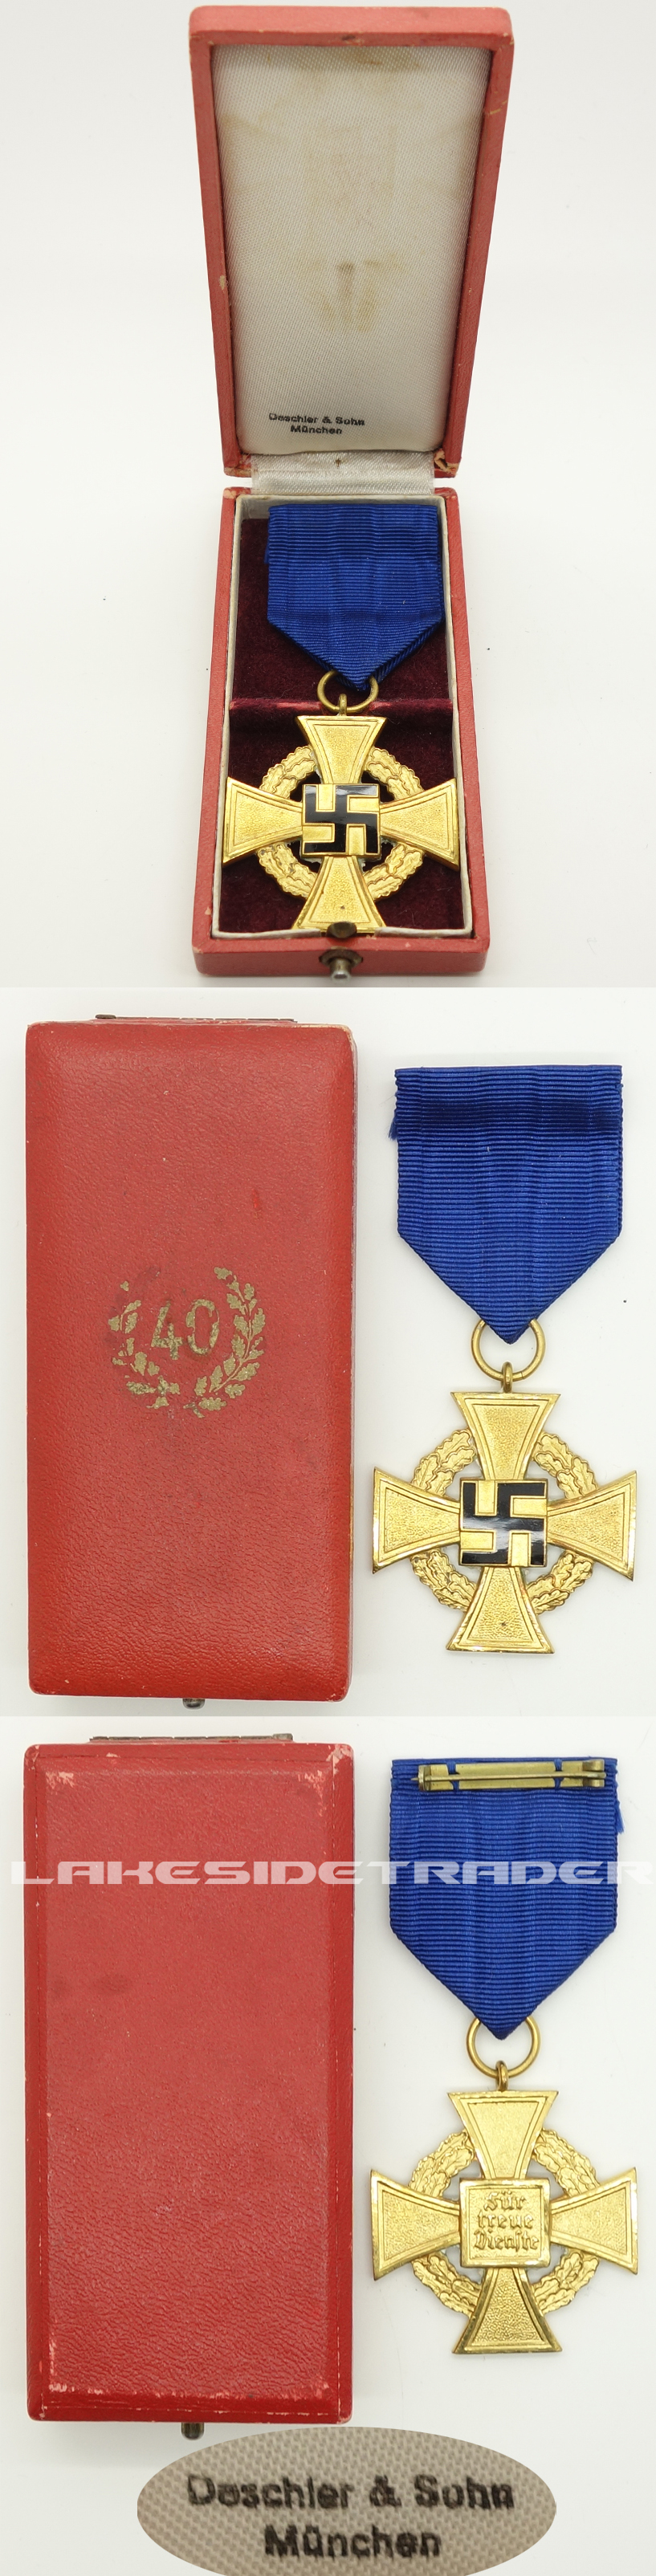 Cased NSDAP 40 Year Faithful Service Cross